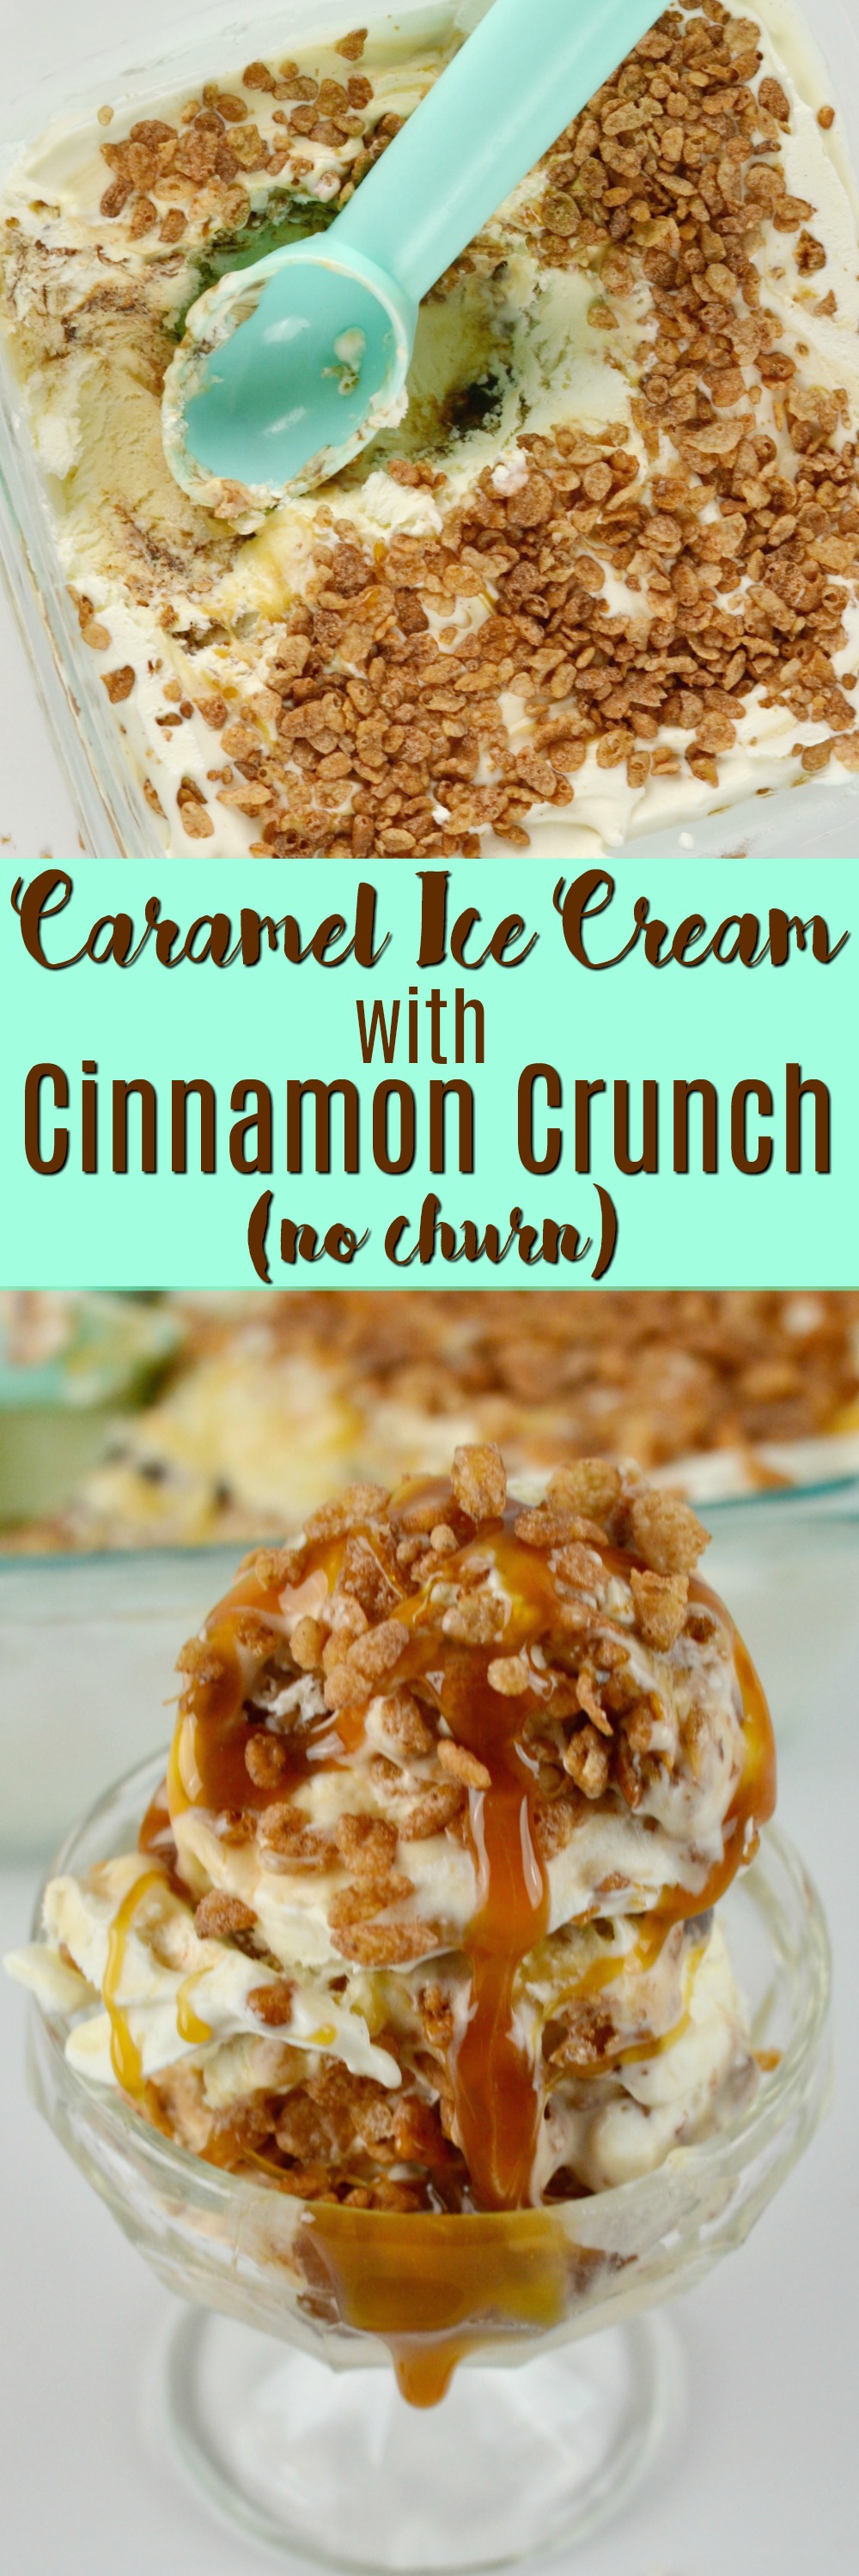 No Churn Caramel Ice Cream with Cinnamon Crunch